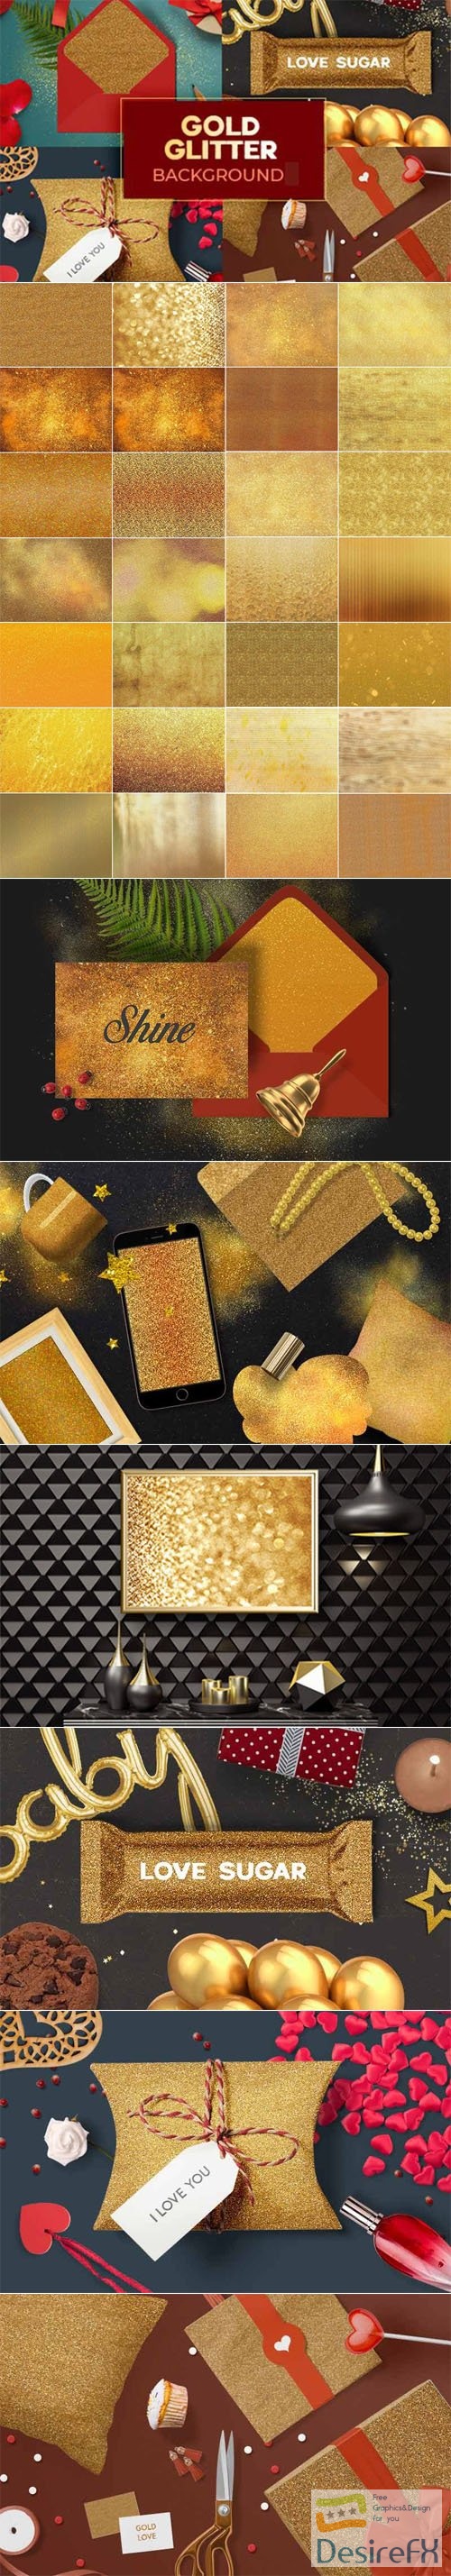 30 Gold Glitter Backgrounds